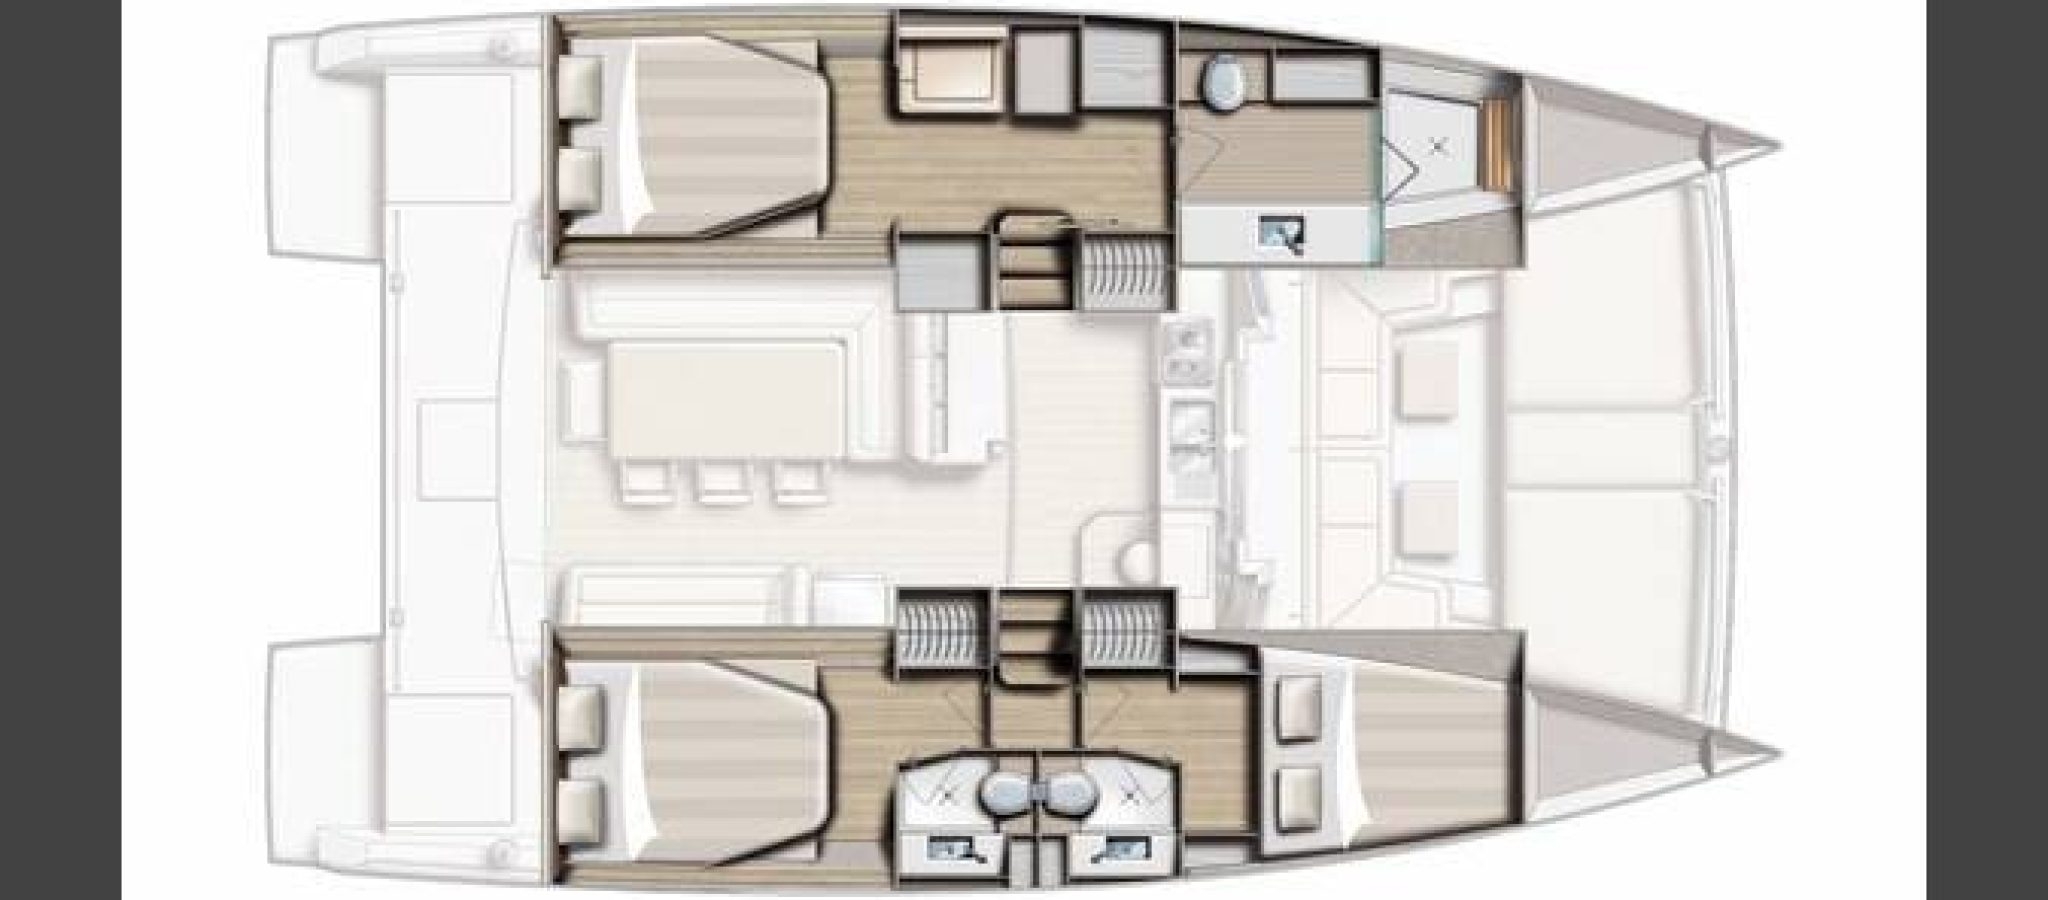 Floor plan image for yacht Bali 4.0 - Lazy Daze